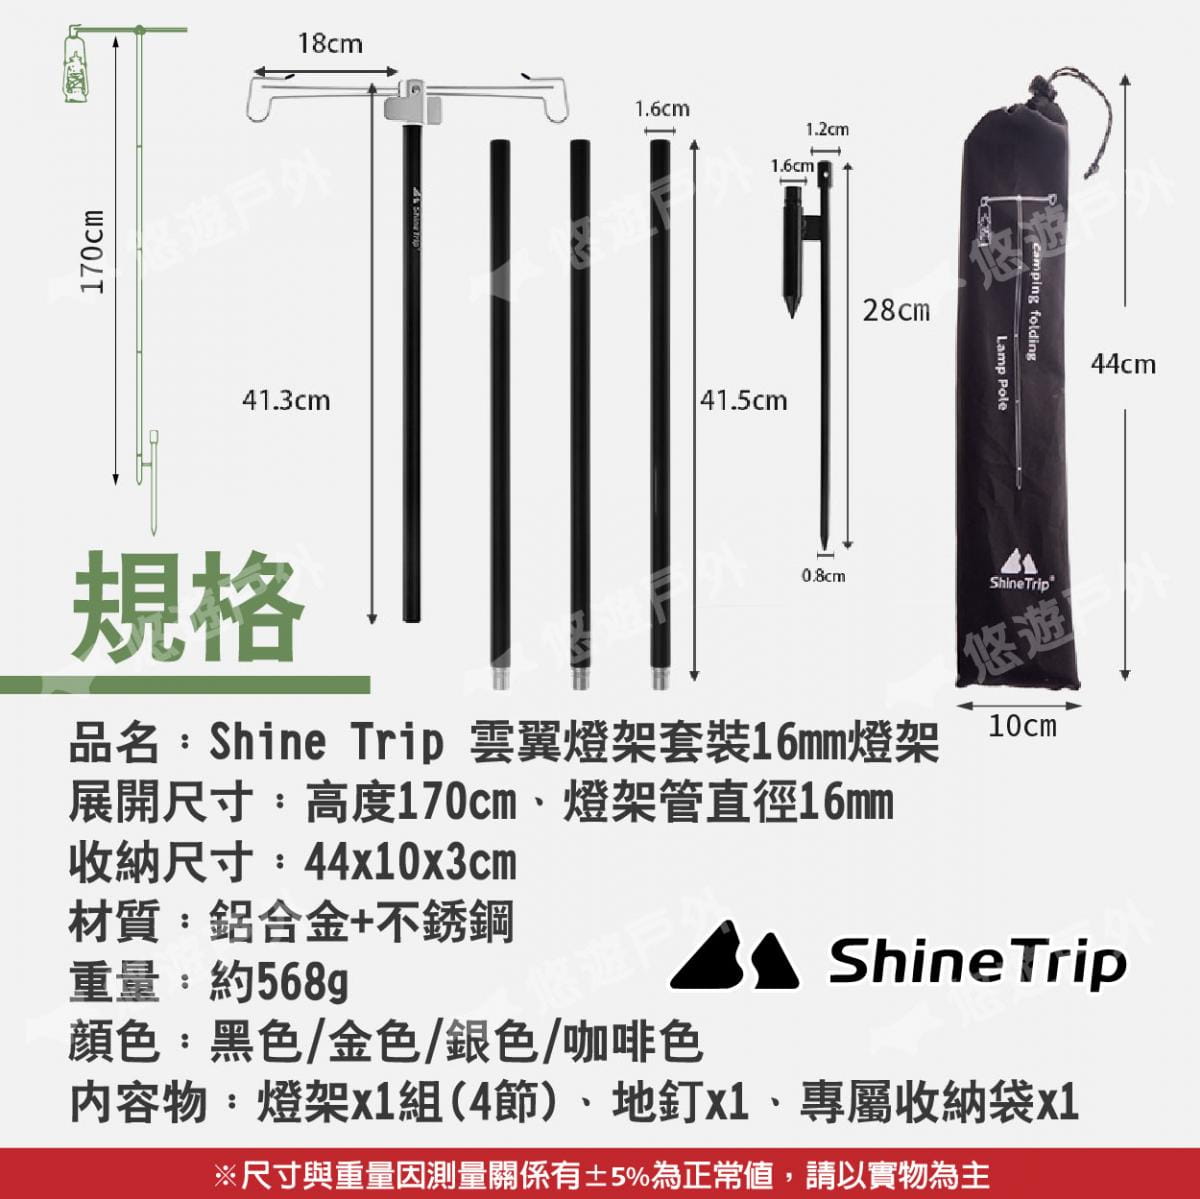 【Shine Trip 山趣】雲翼燈架套裝 16mm燈架 悠遊戶外 8